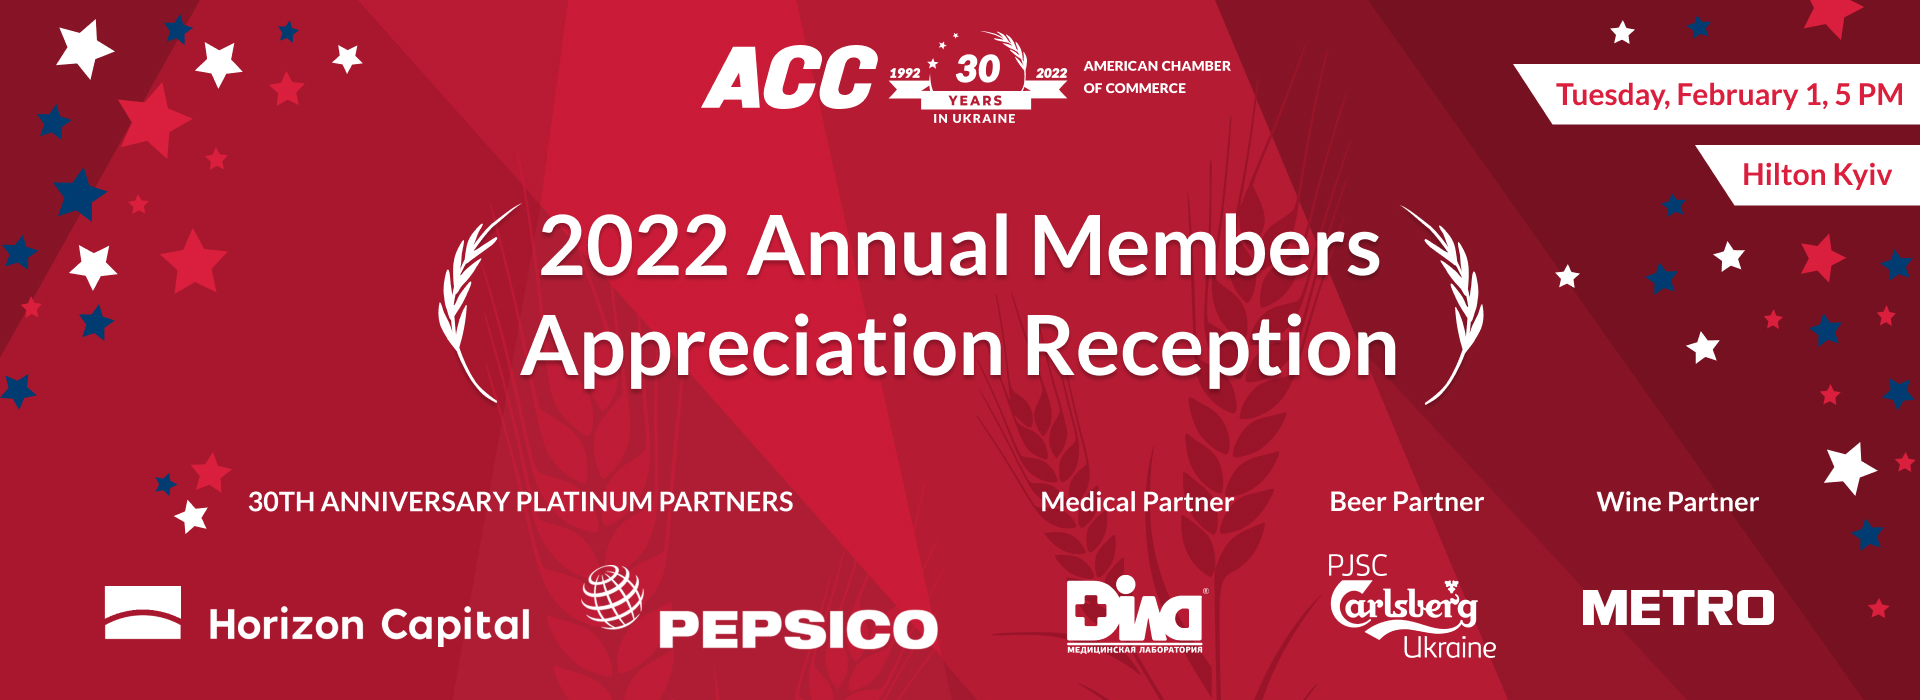 Annual Members Appreciation Reception 2022